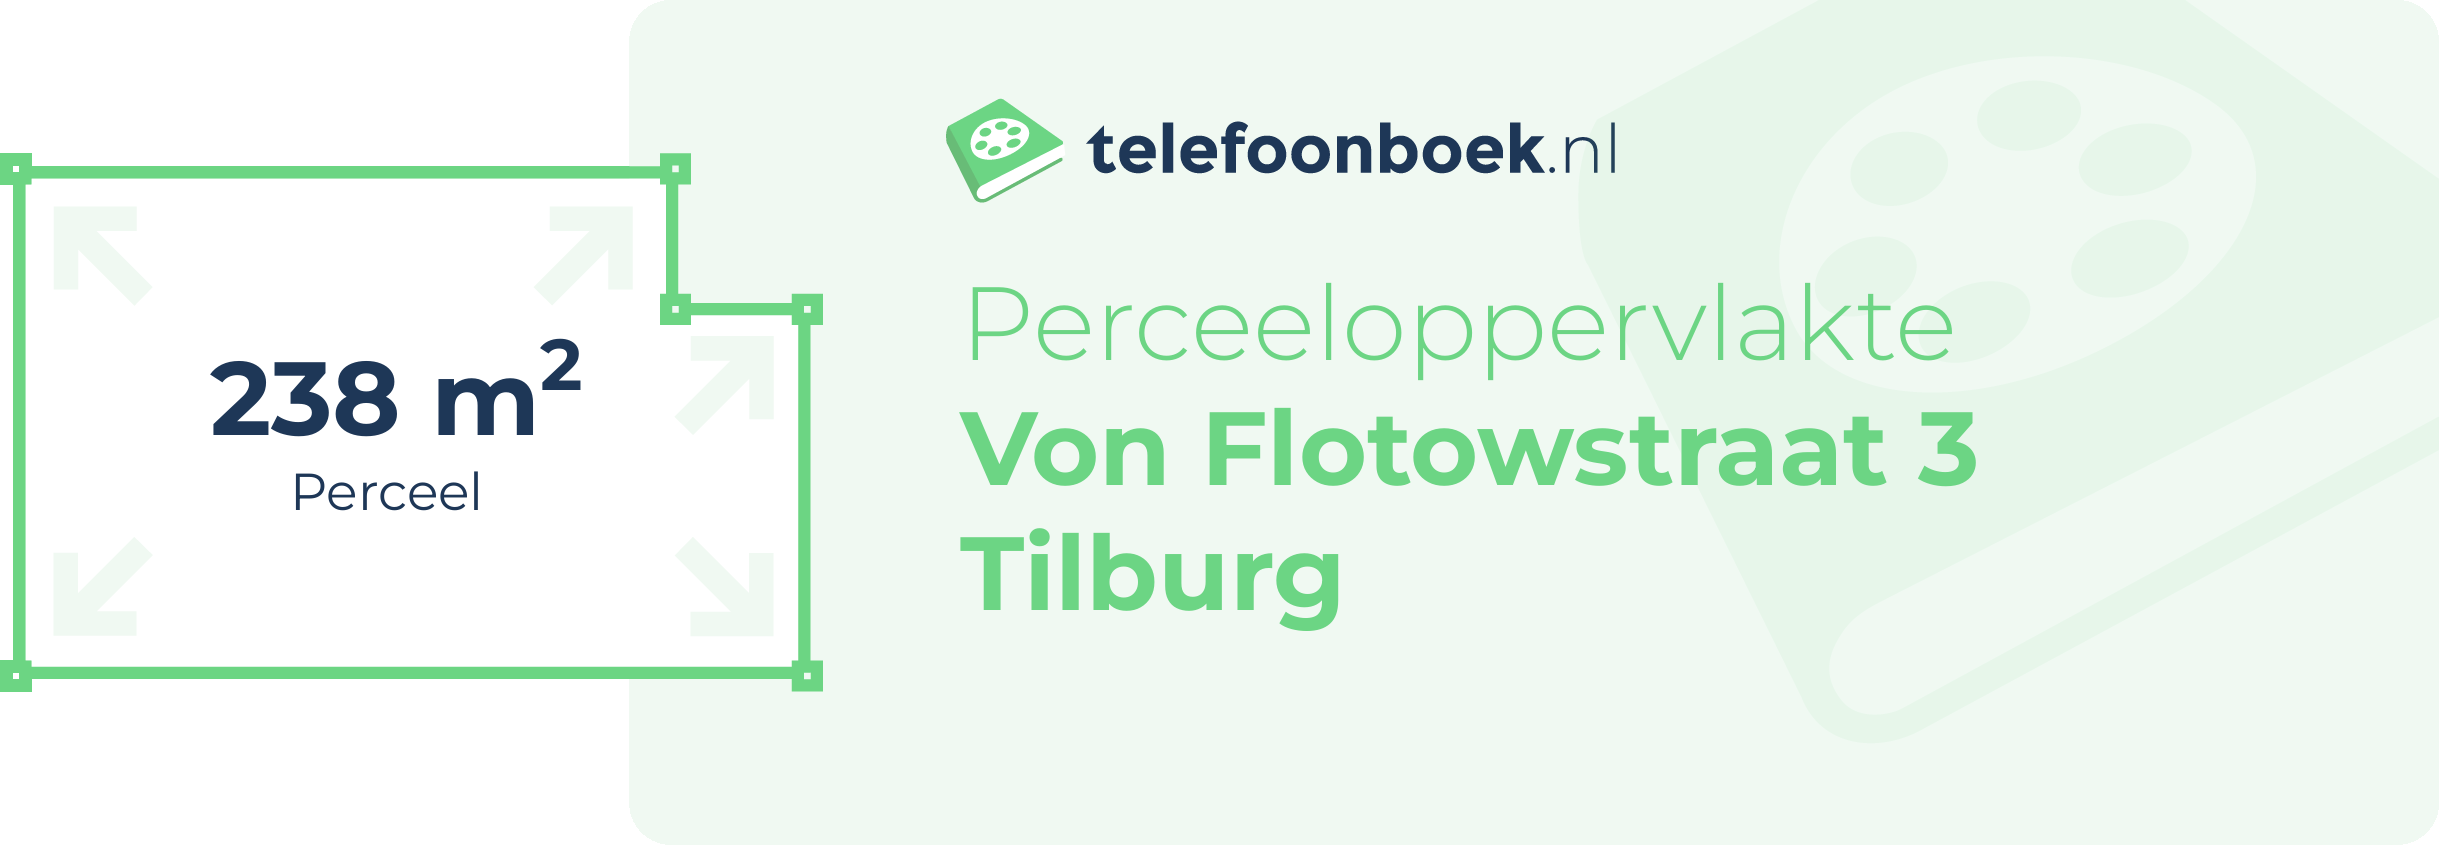 Perceeloppervlakte Von Flotowstraat 3 Tilburg